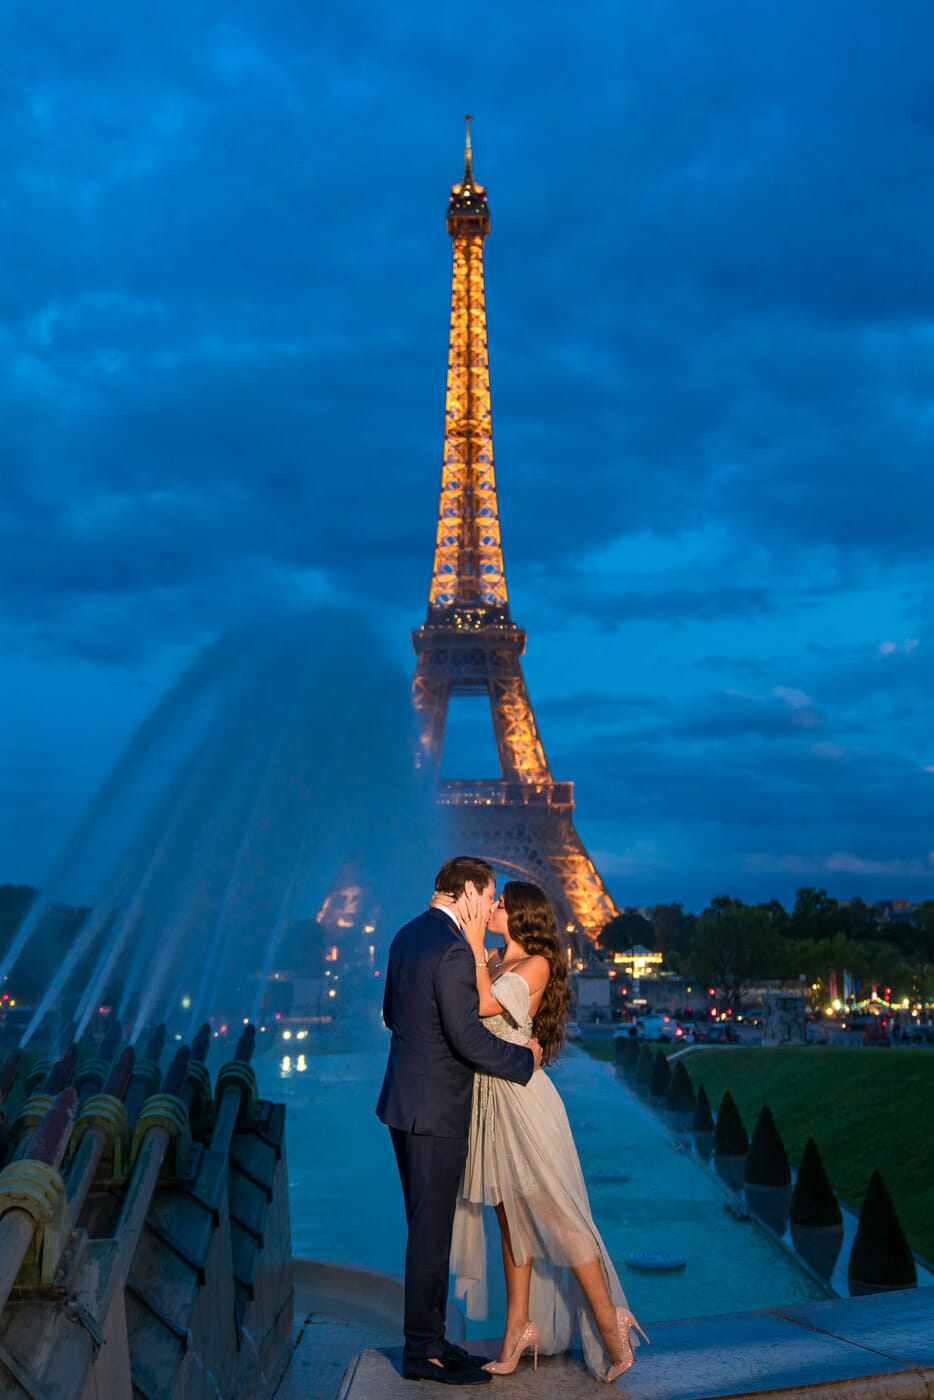 Romantic Eiffel Tower couple photos during the Blue Hour in Paris